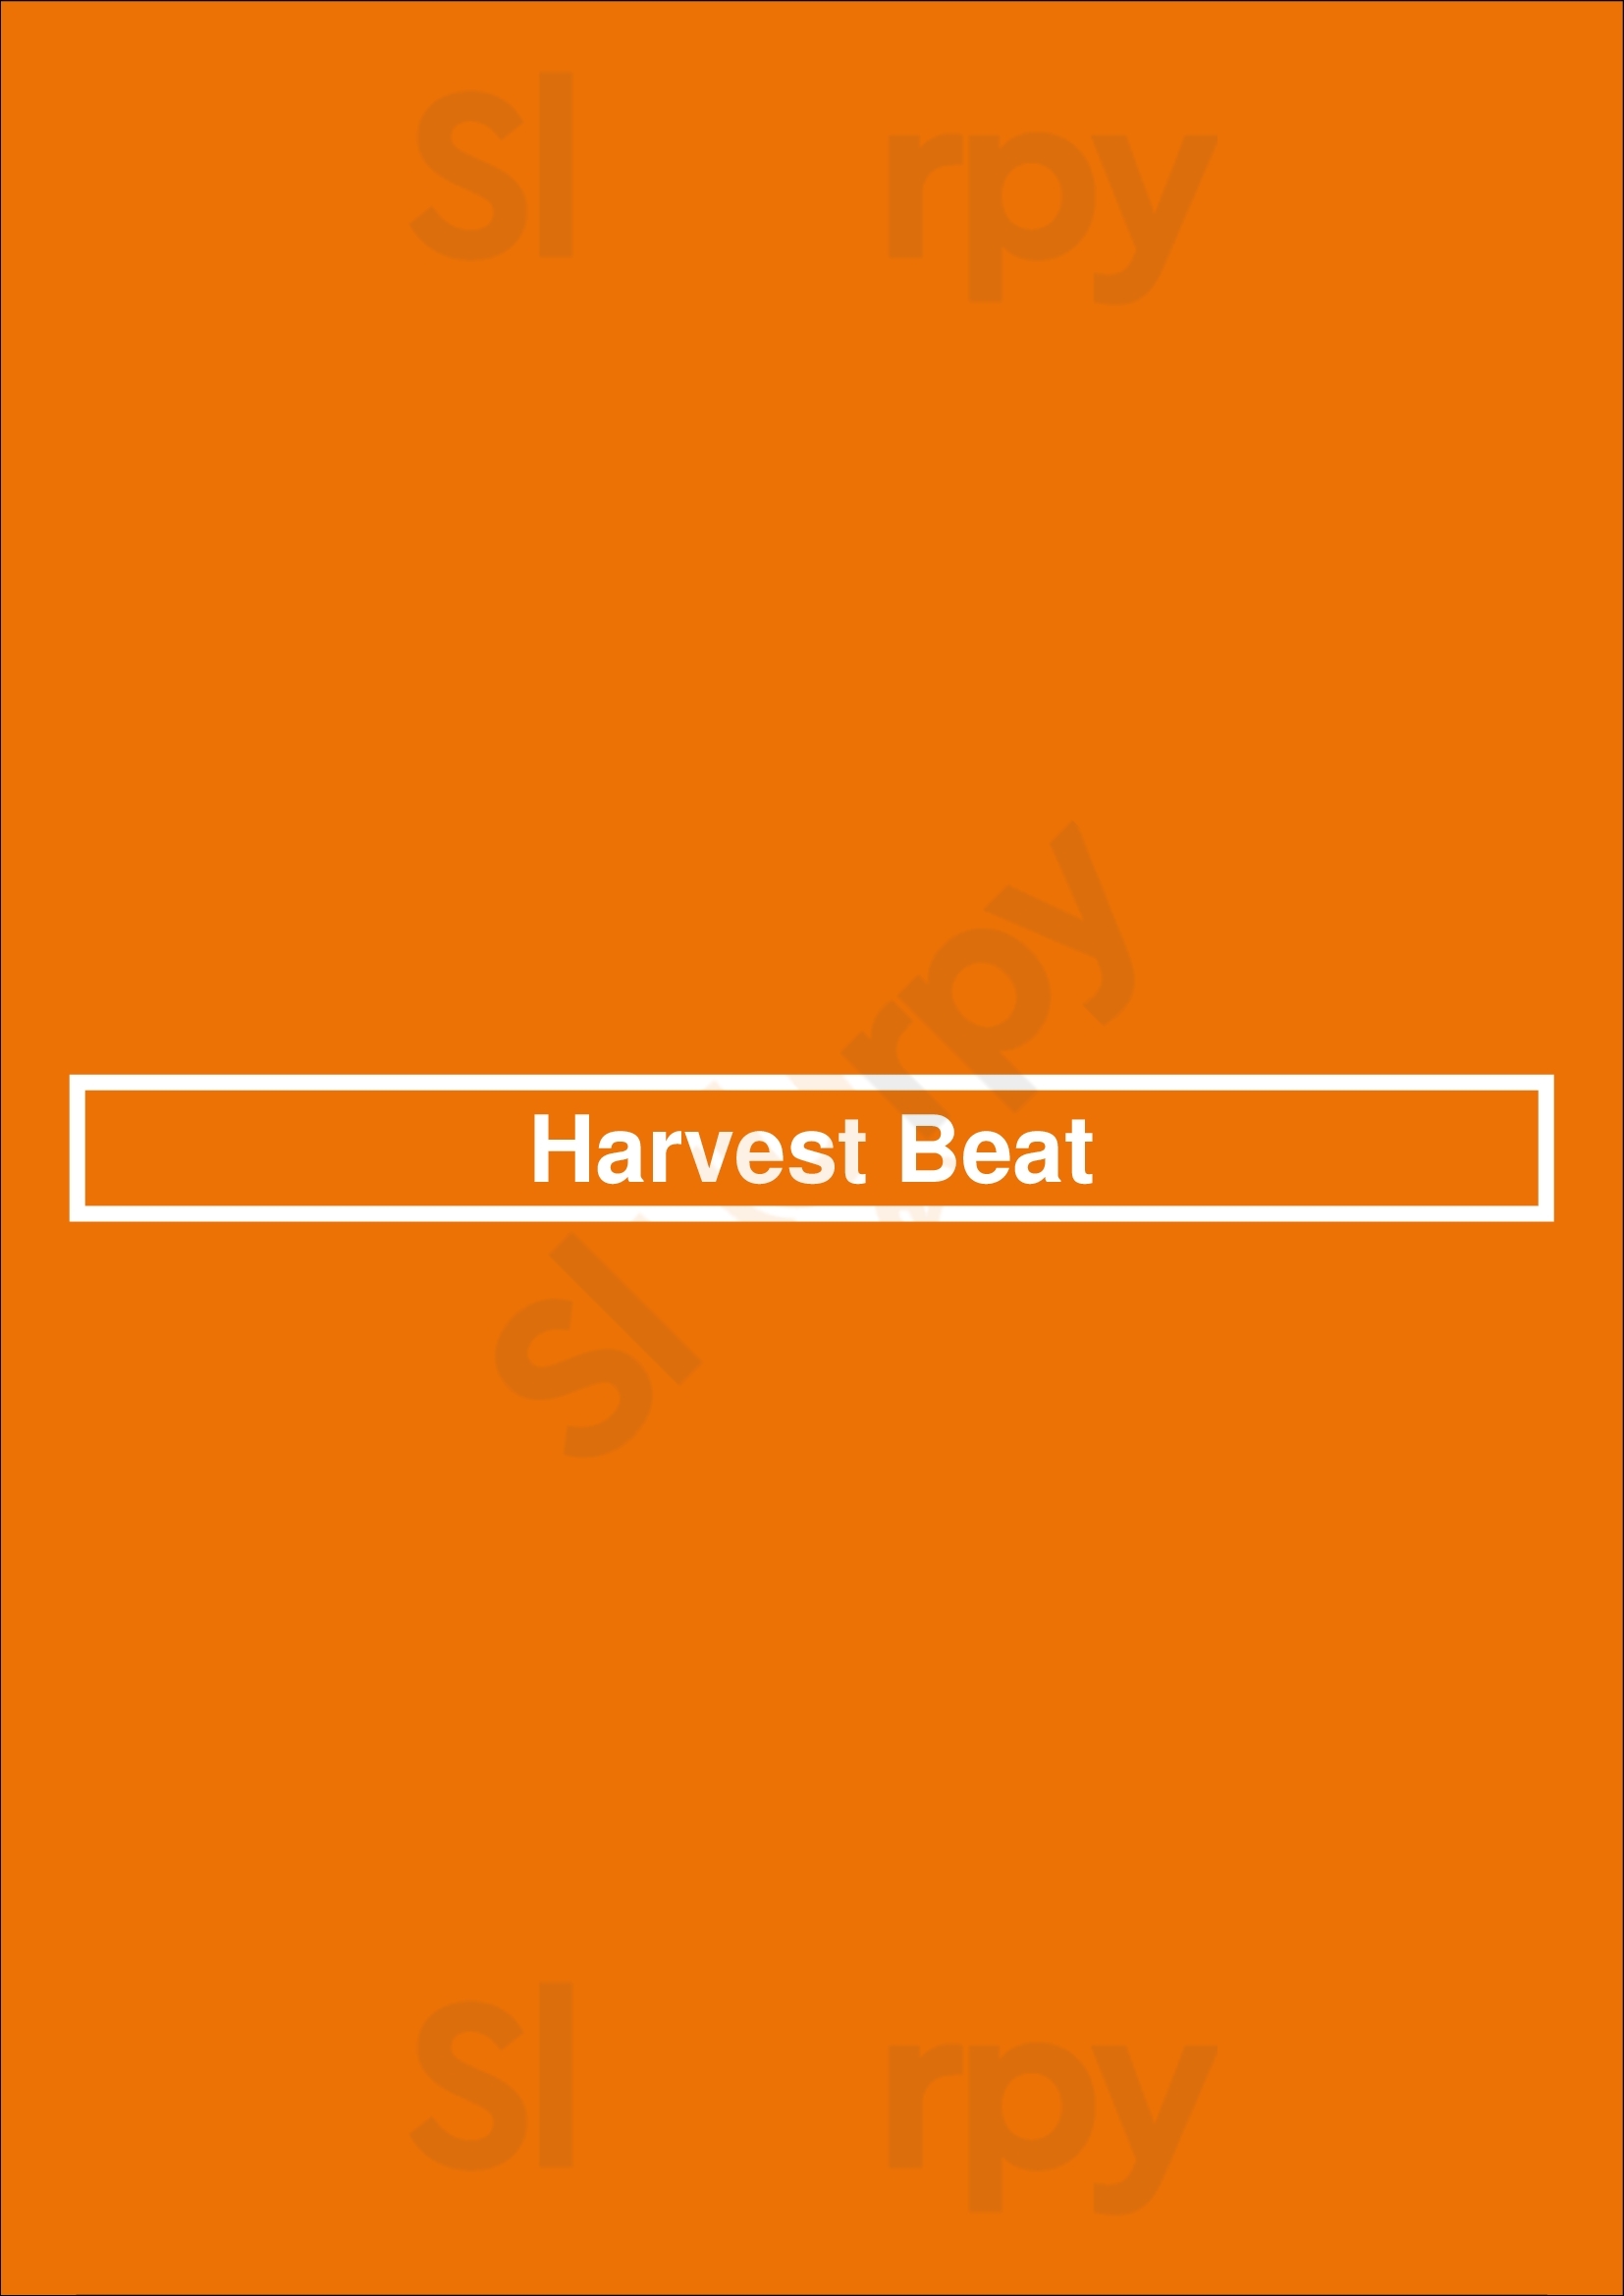 Harvest Beat Seattle Menu - 1